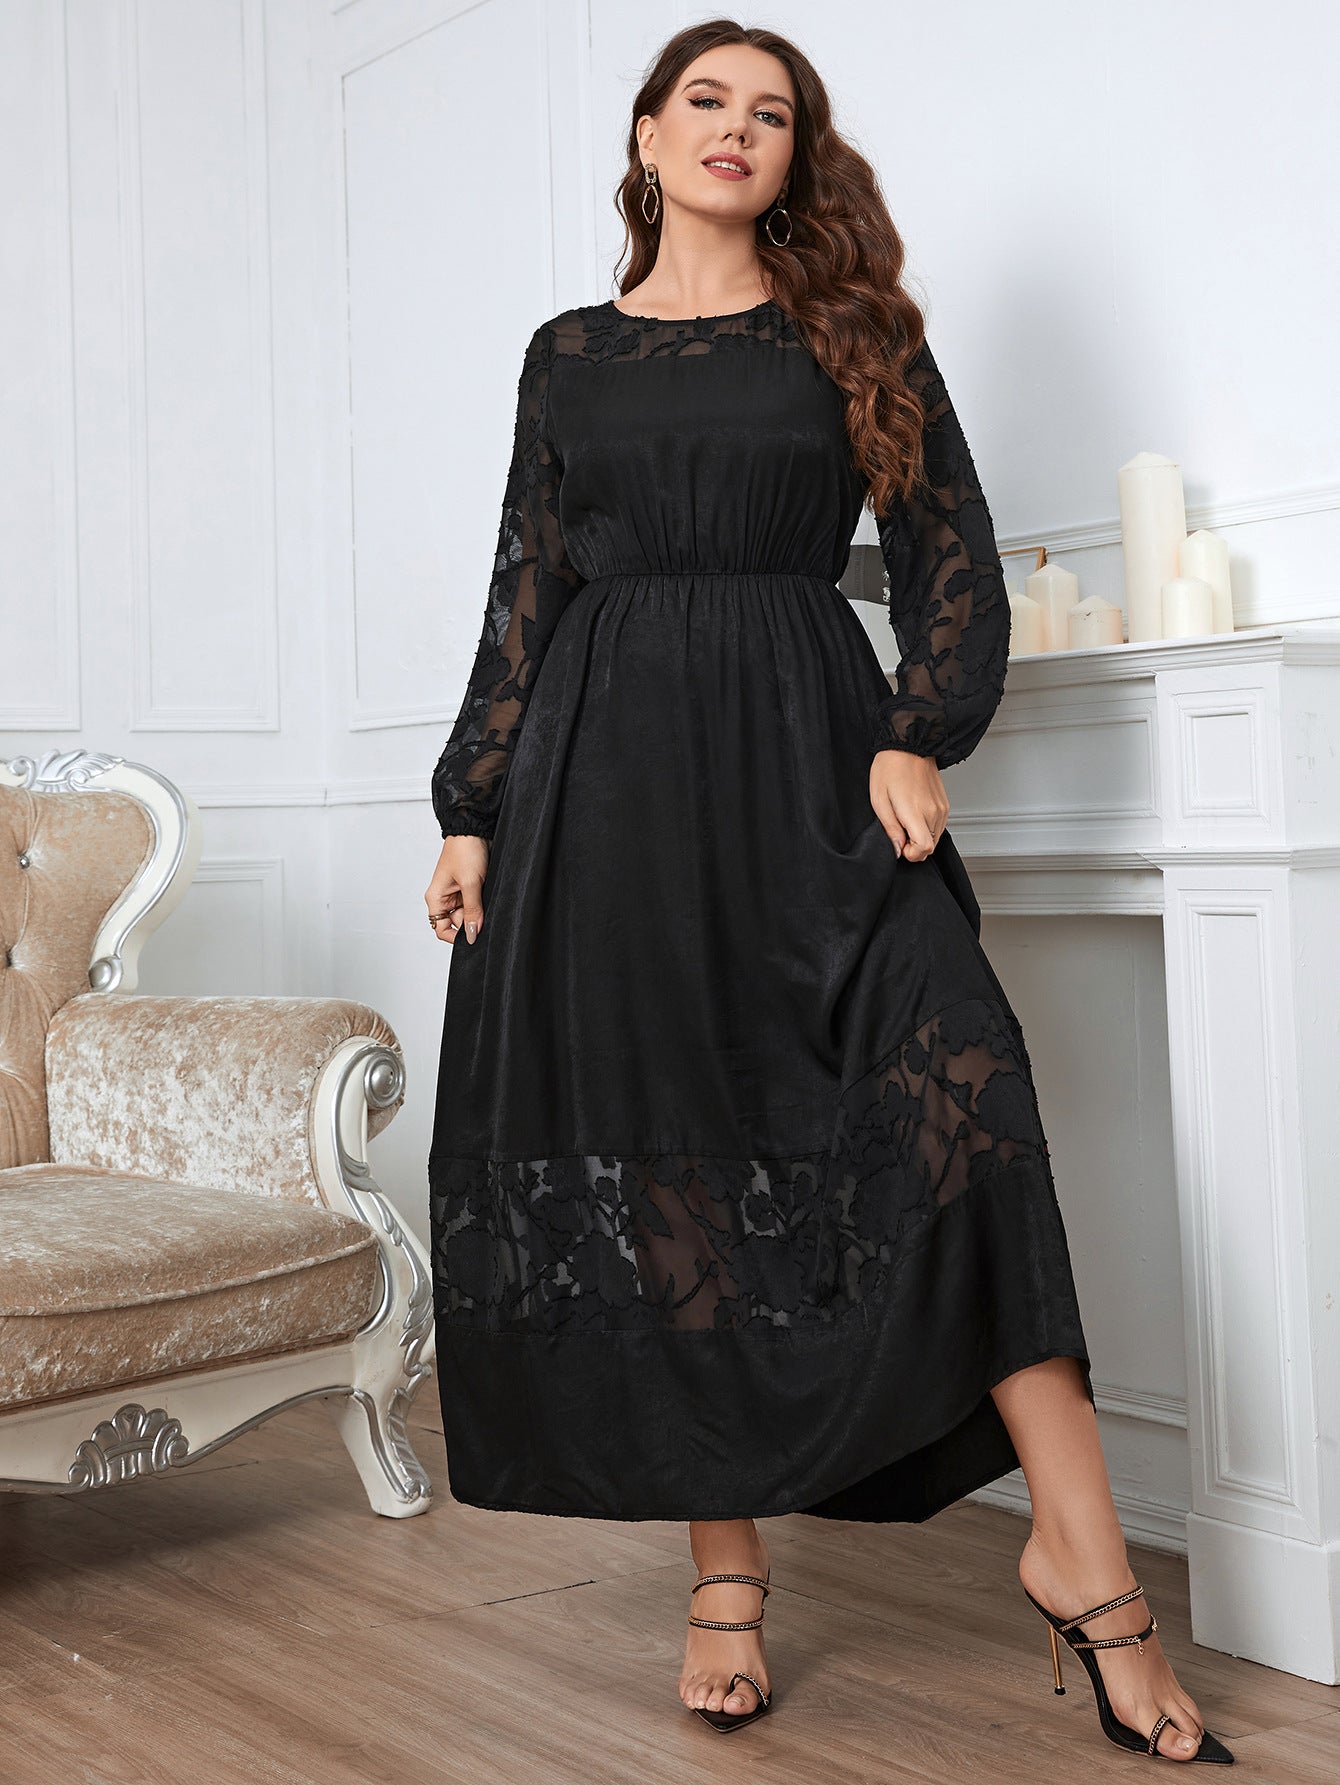 Formal Black Plus Size Ankle Length Dress – Something She Likes